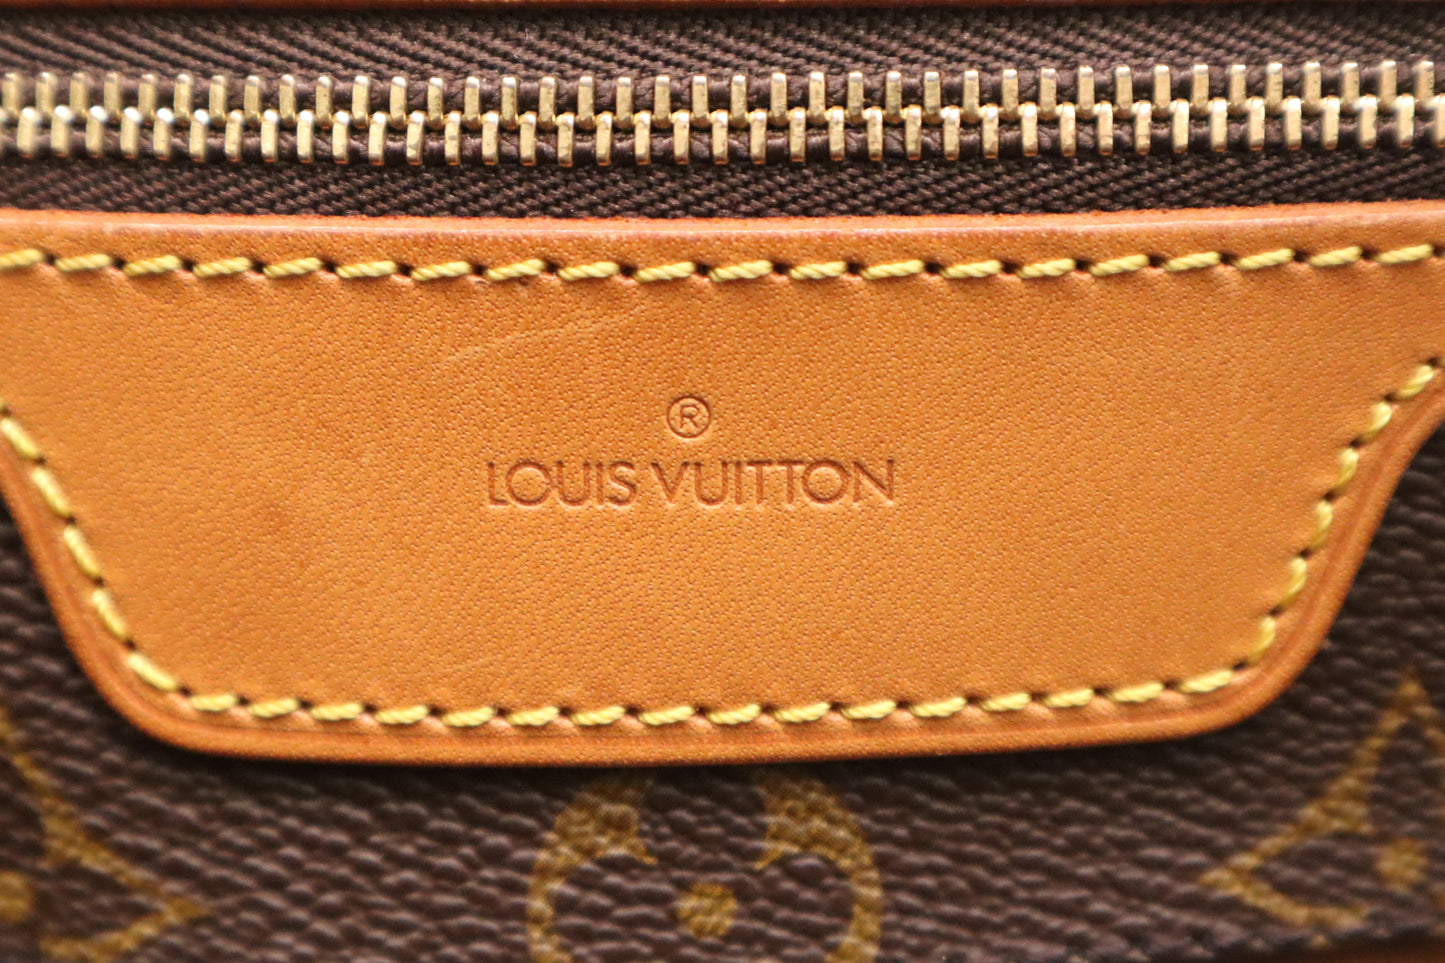 Louis Vuitton Sac Shopping 48 in Monogram Canvas